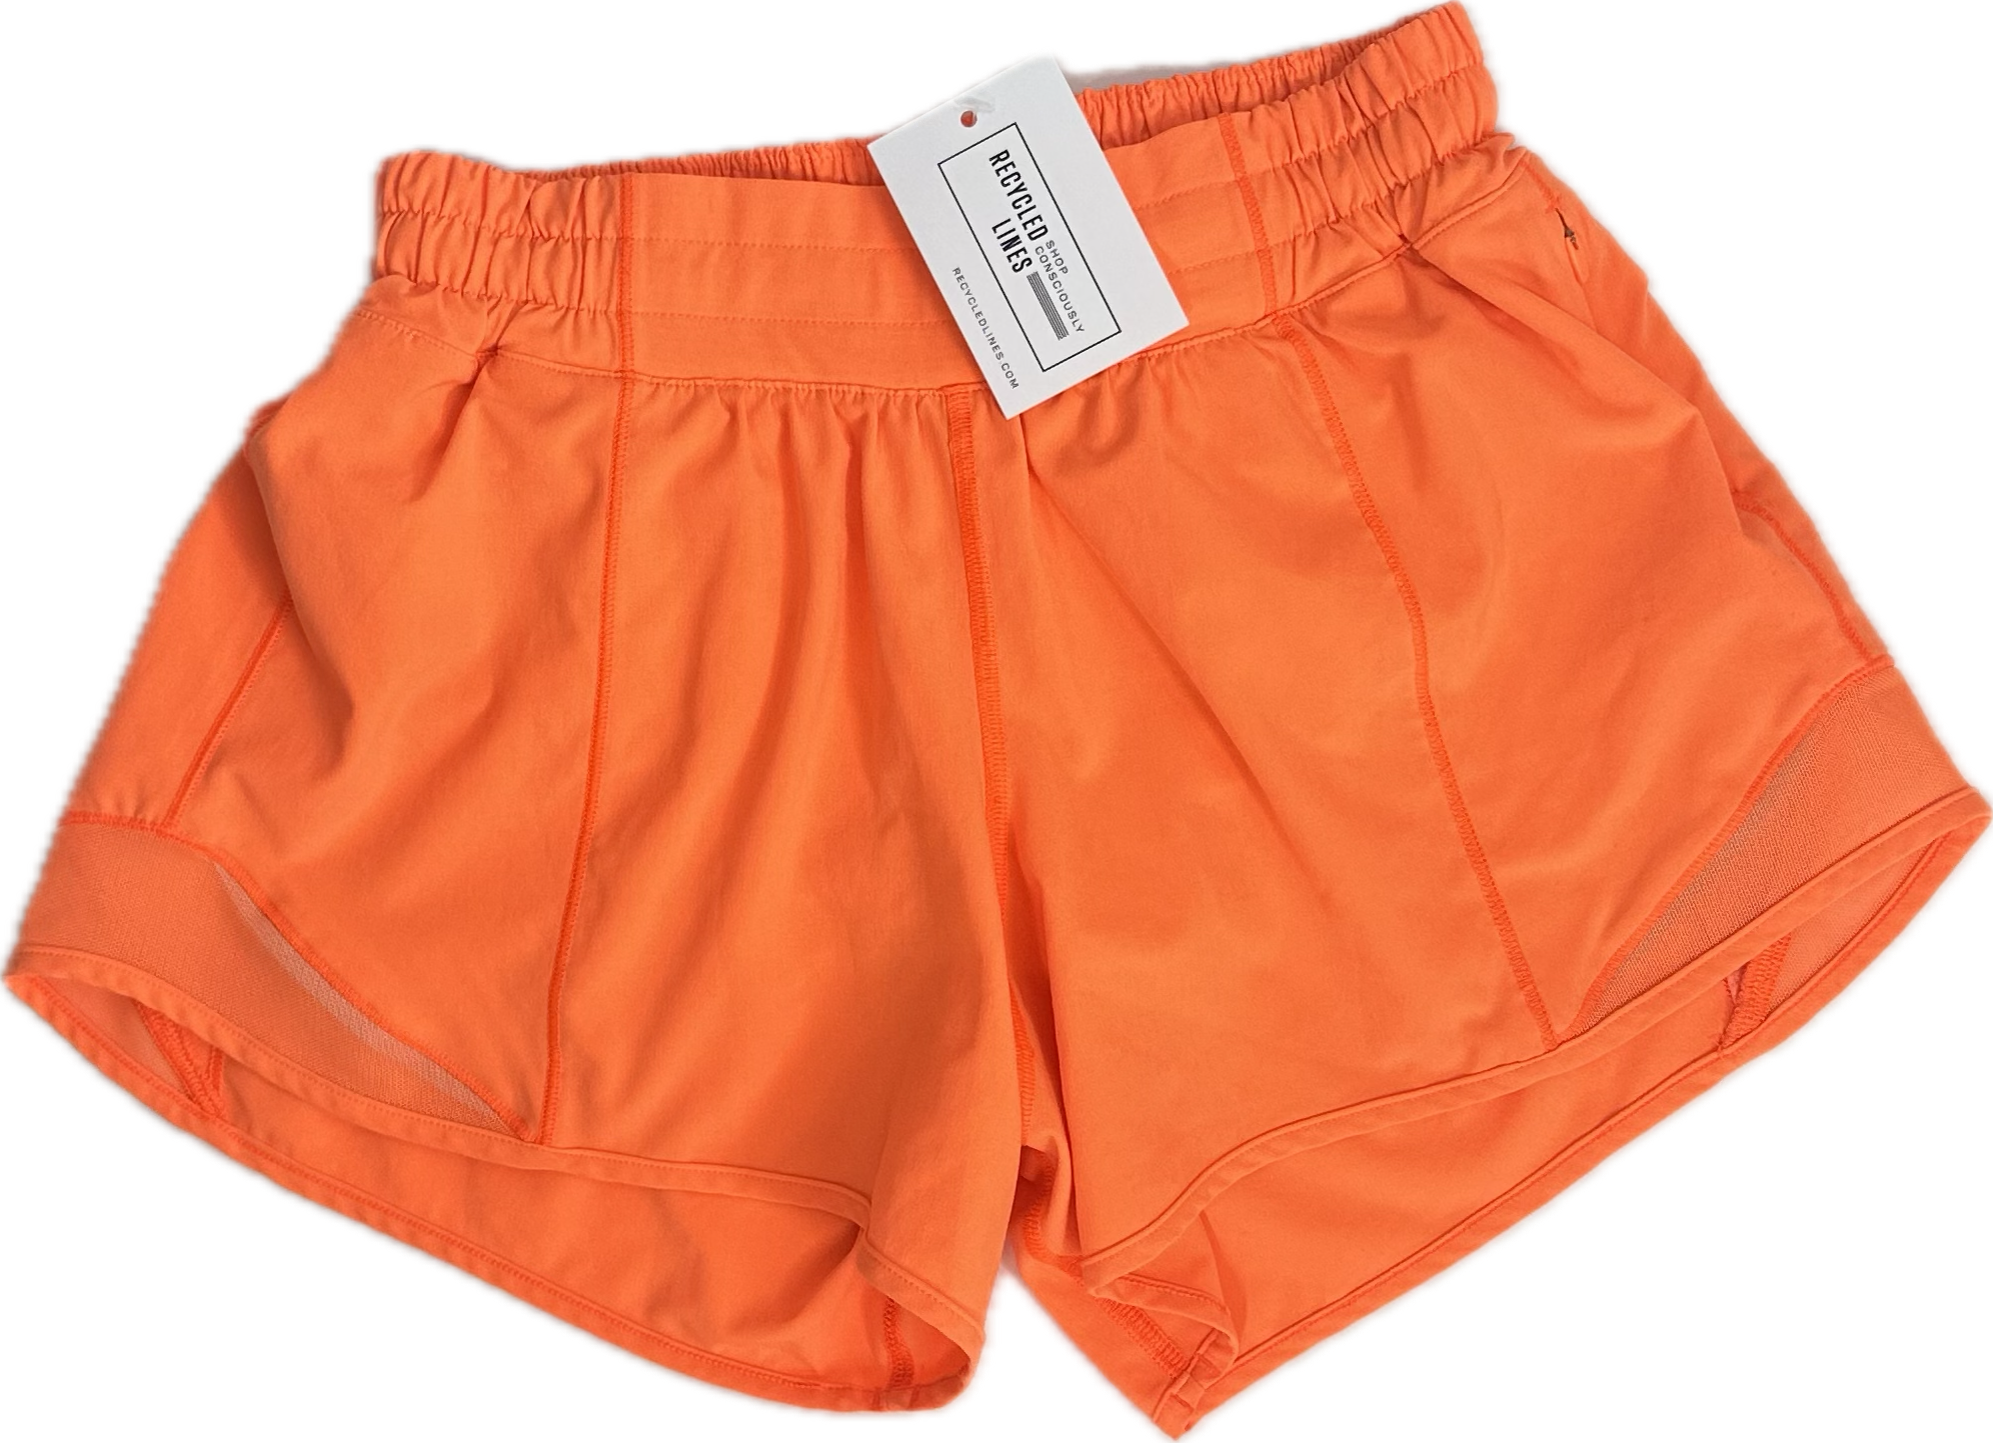 Lululemon Shorts, Bright Orange Womens Size 4 Tall